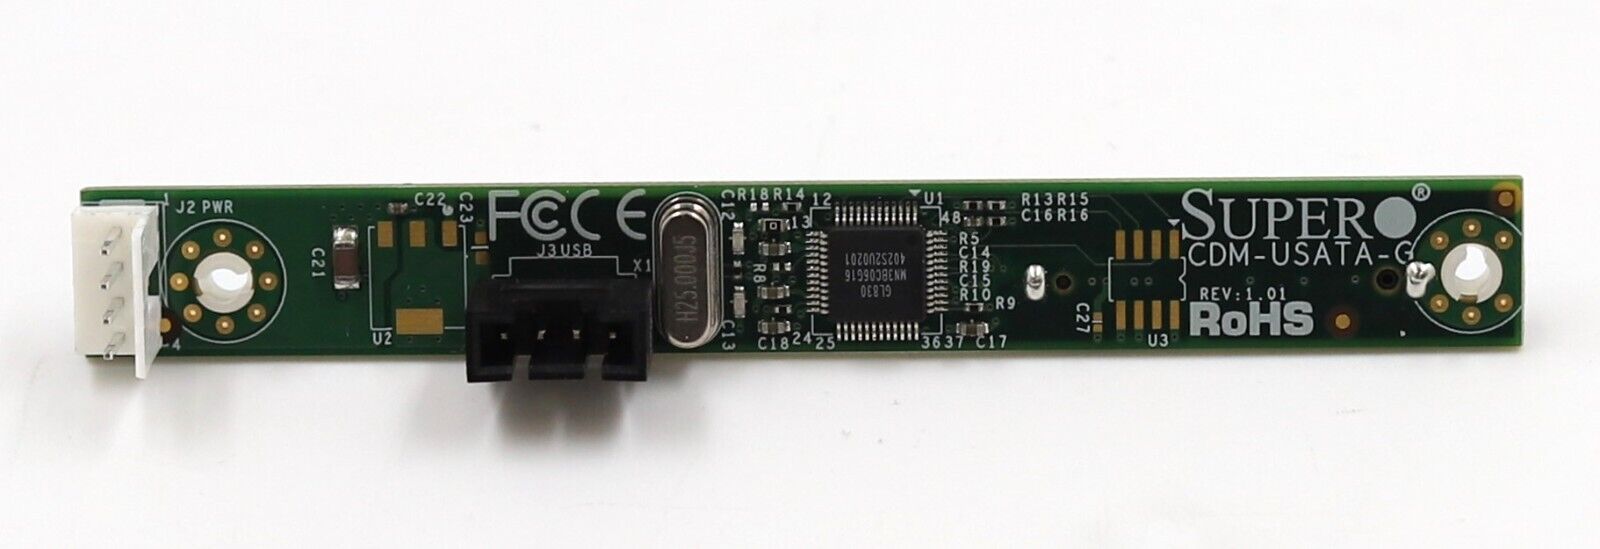 SuperMicro Mini-SATA To USB Adapter For Slim DVD P/N: CDM-USATA-G Tested Working